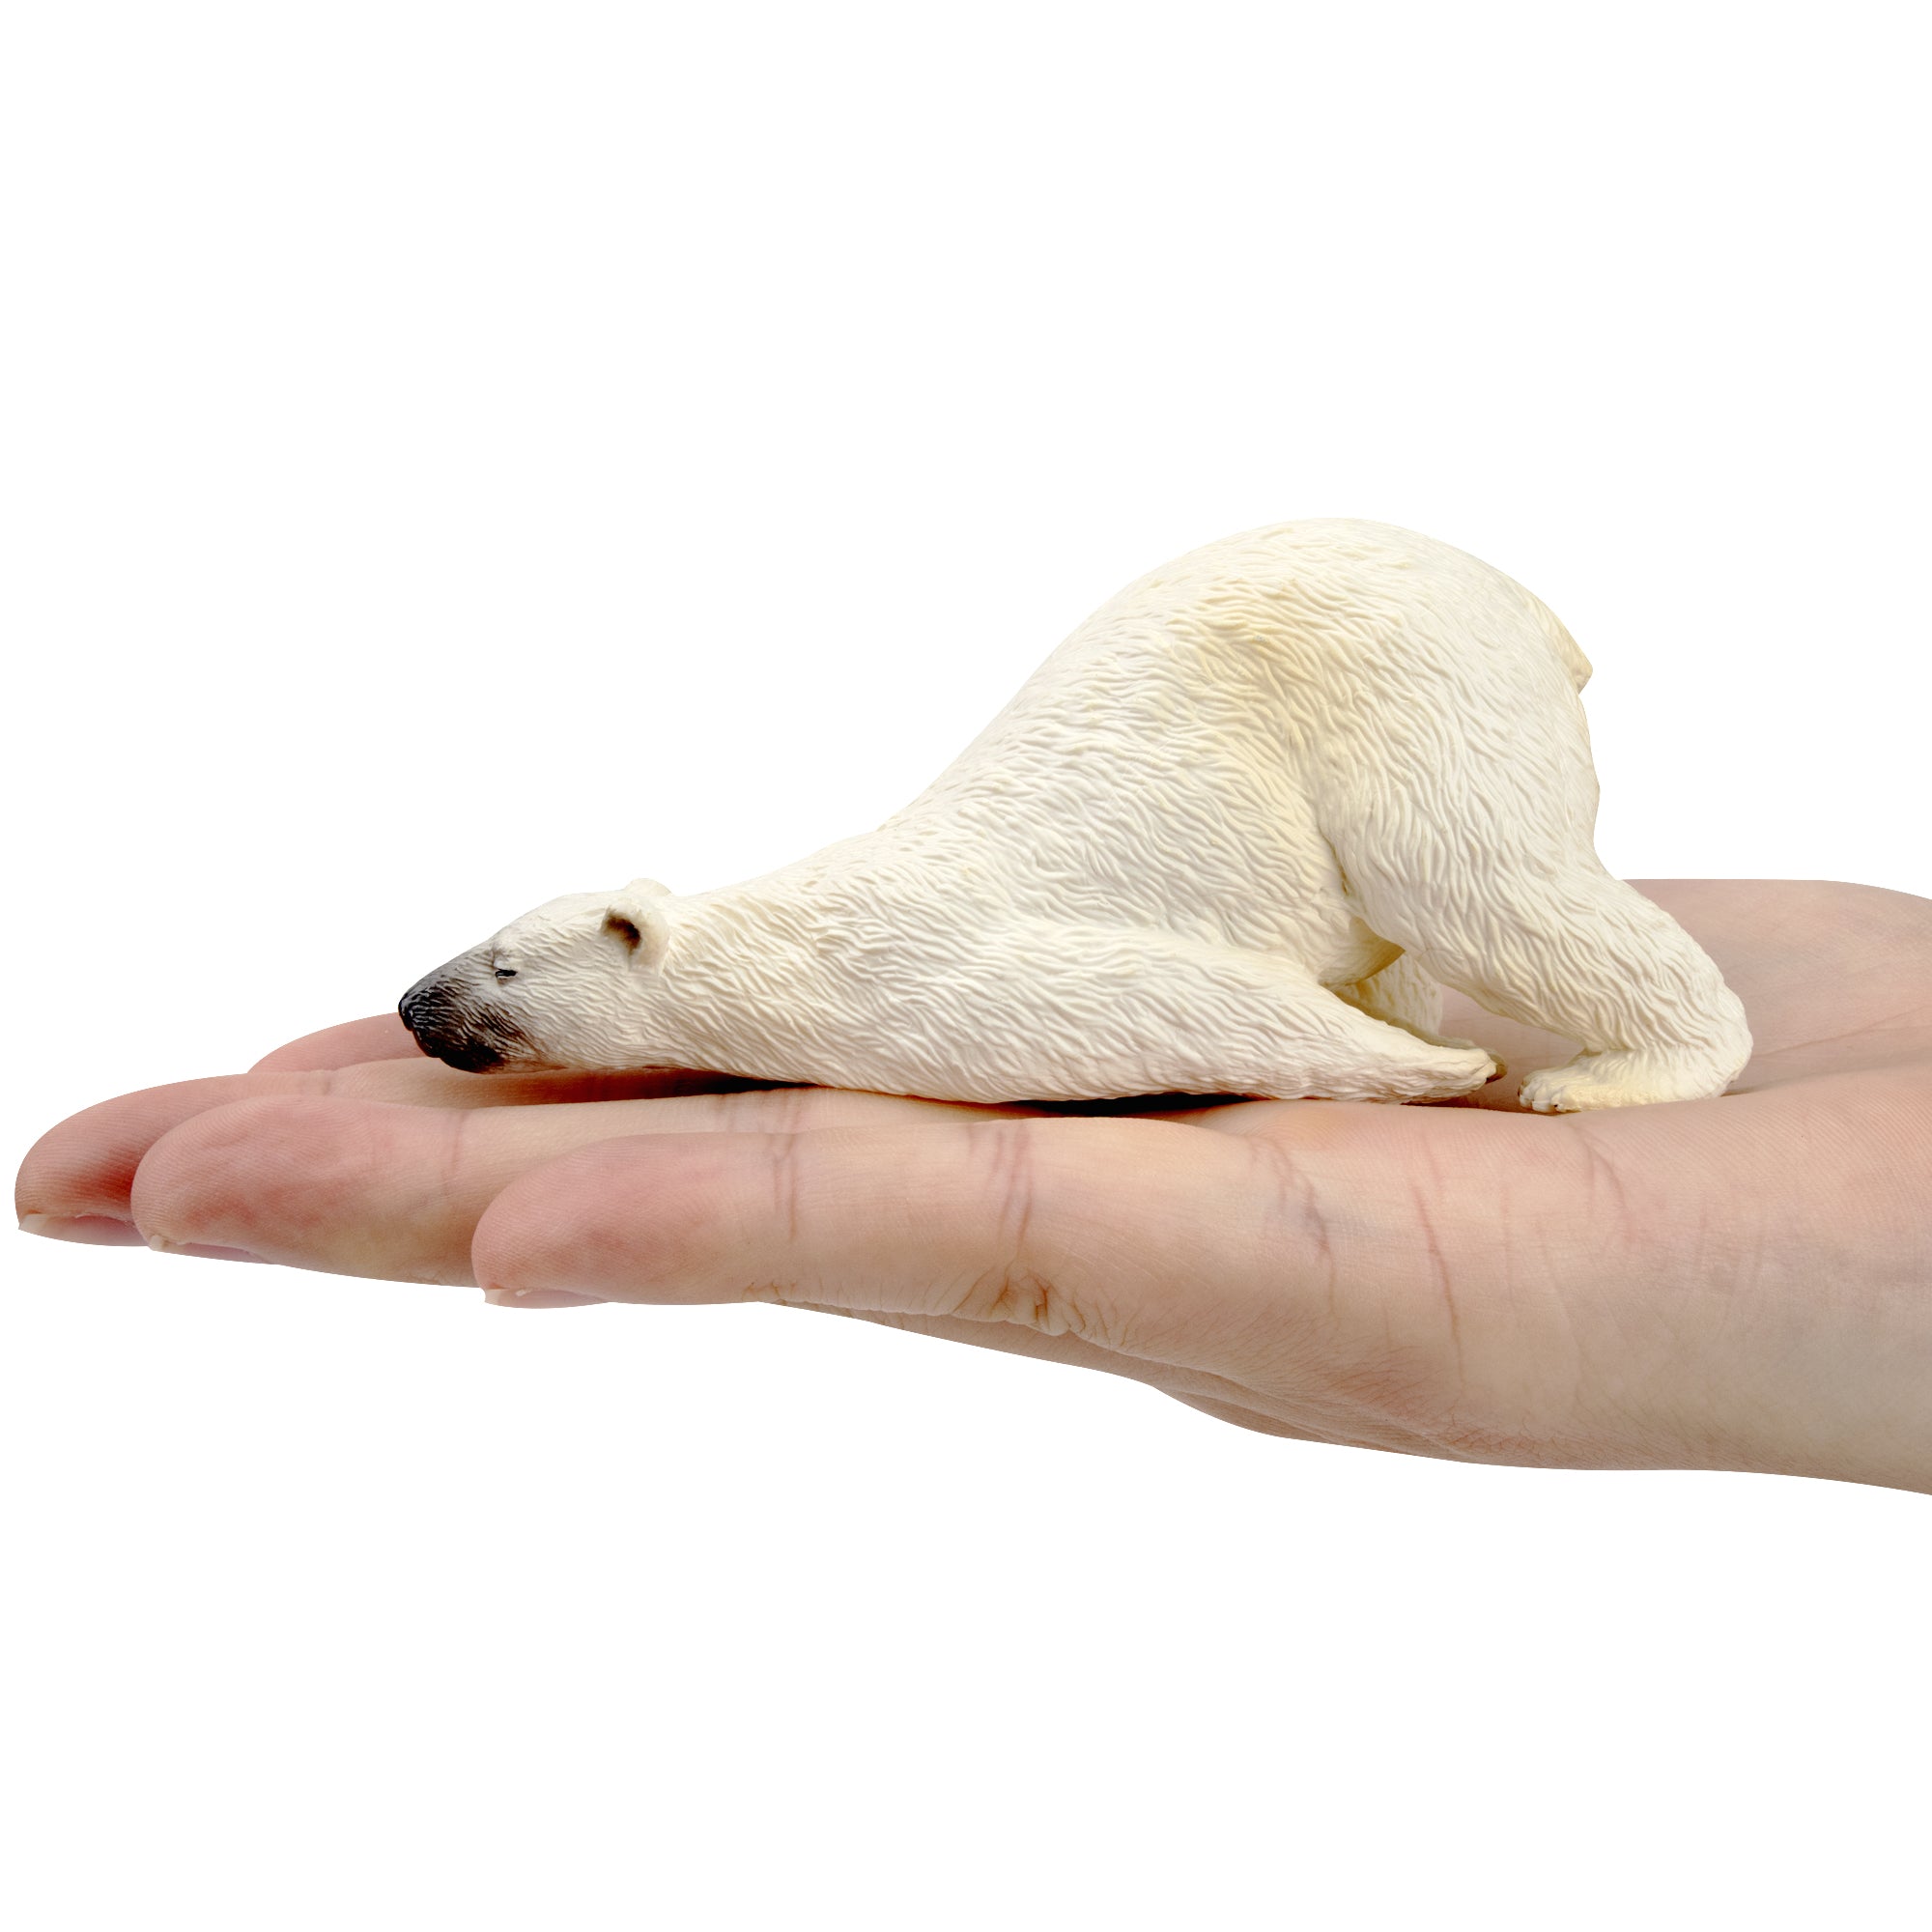 Toymany Lying Adult Polar Bear Figurine Toy-on hand